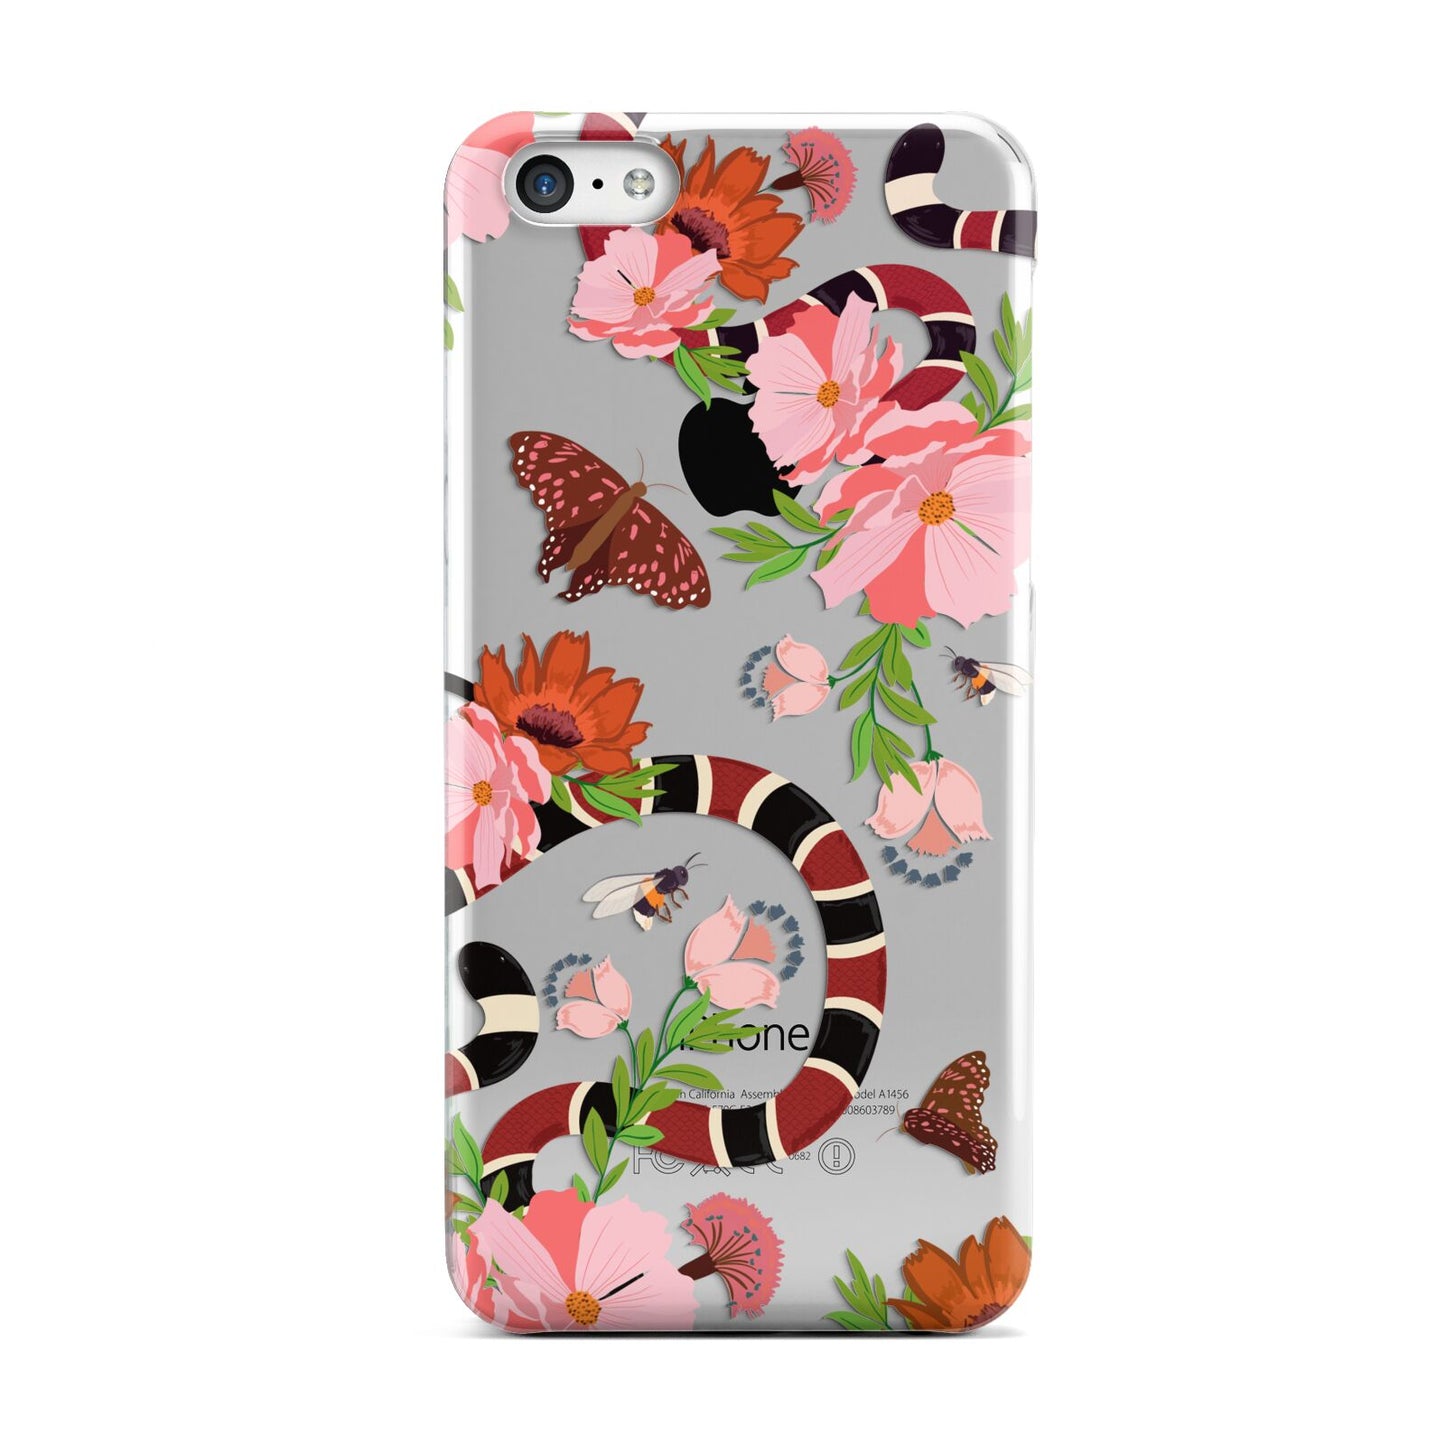 Floral Snake Apple iPhone 5c Case